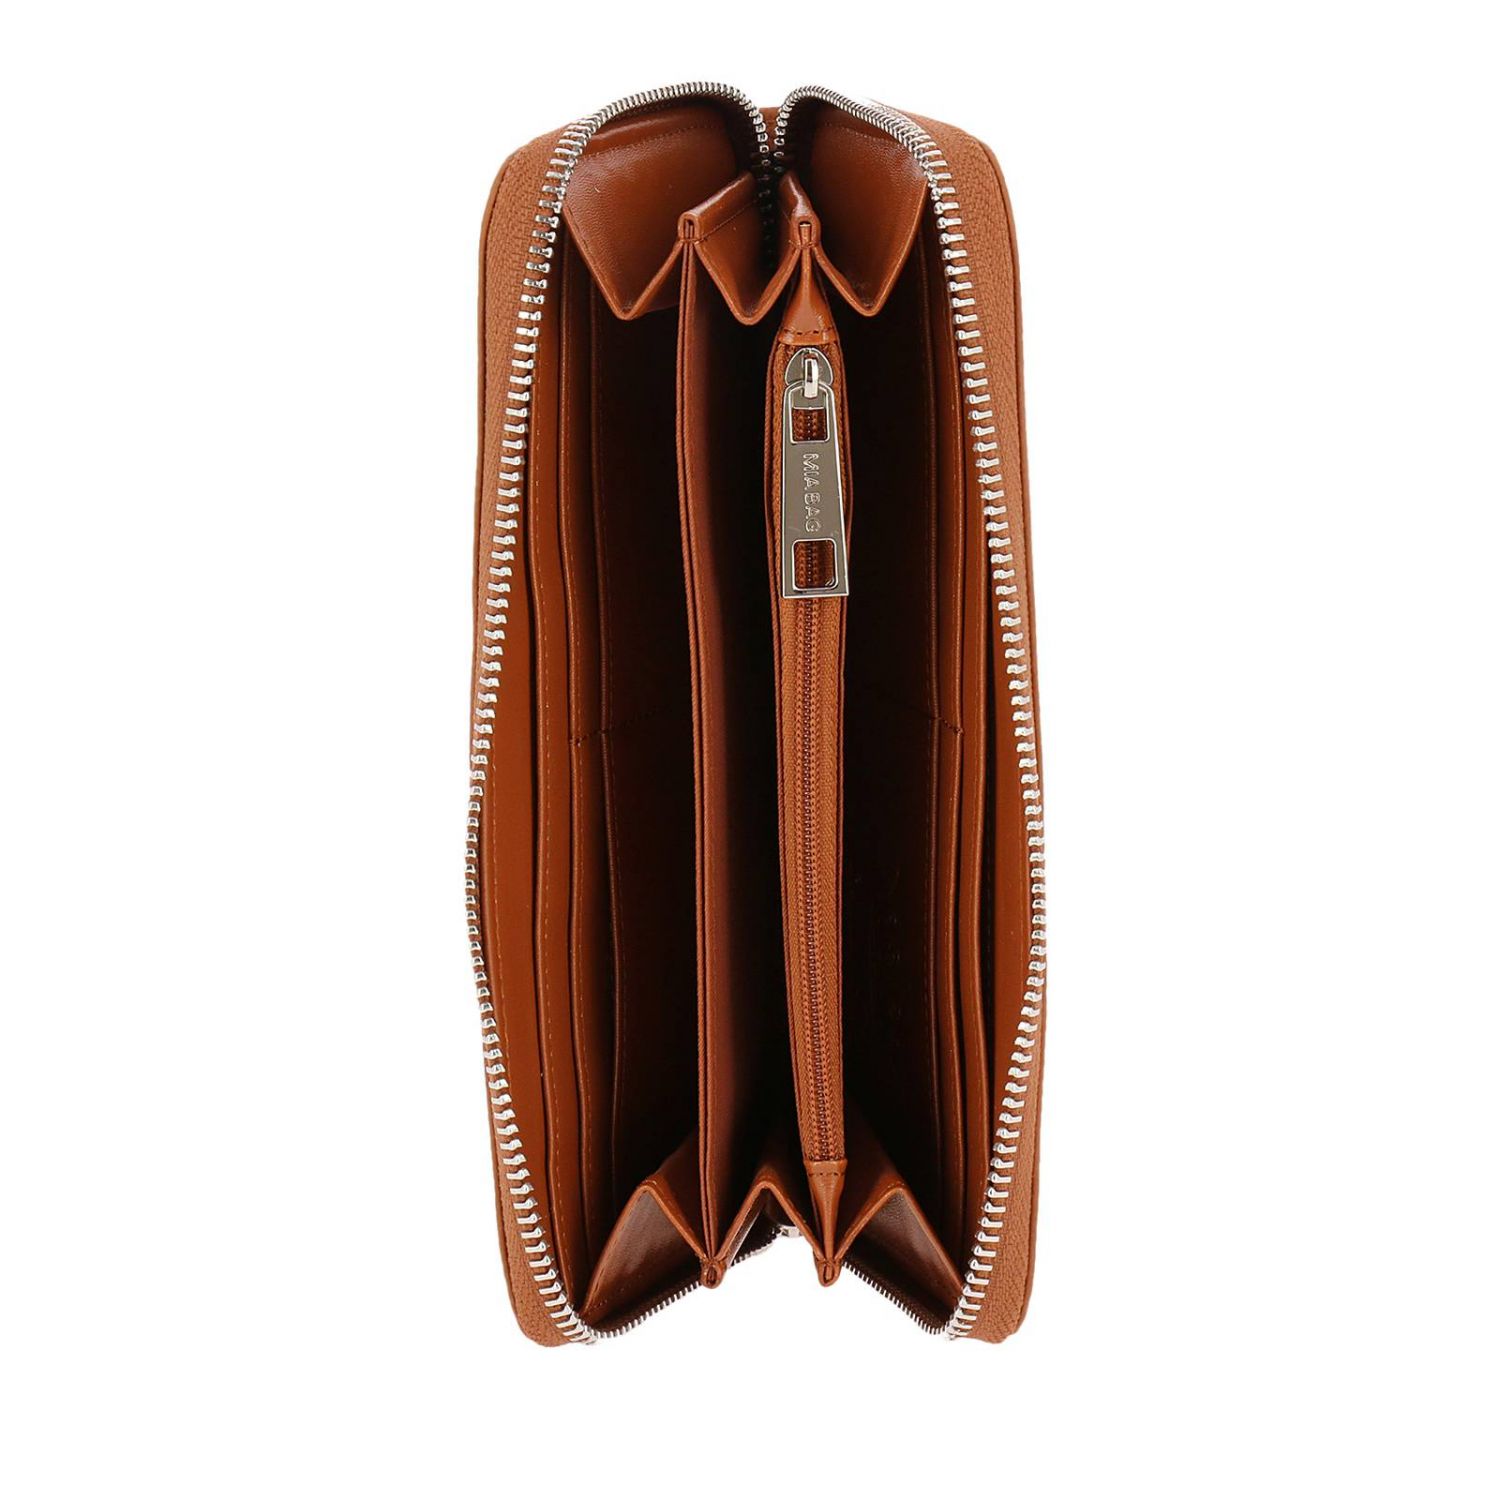 Mia Bag Outlet: Wallet women - Leather | Wallet Mia Bag 18114 GIGLIO.COM